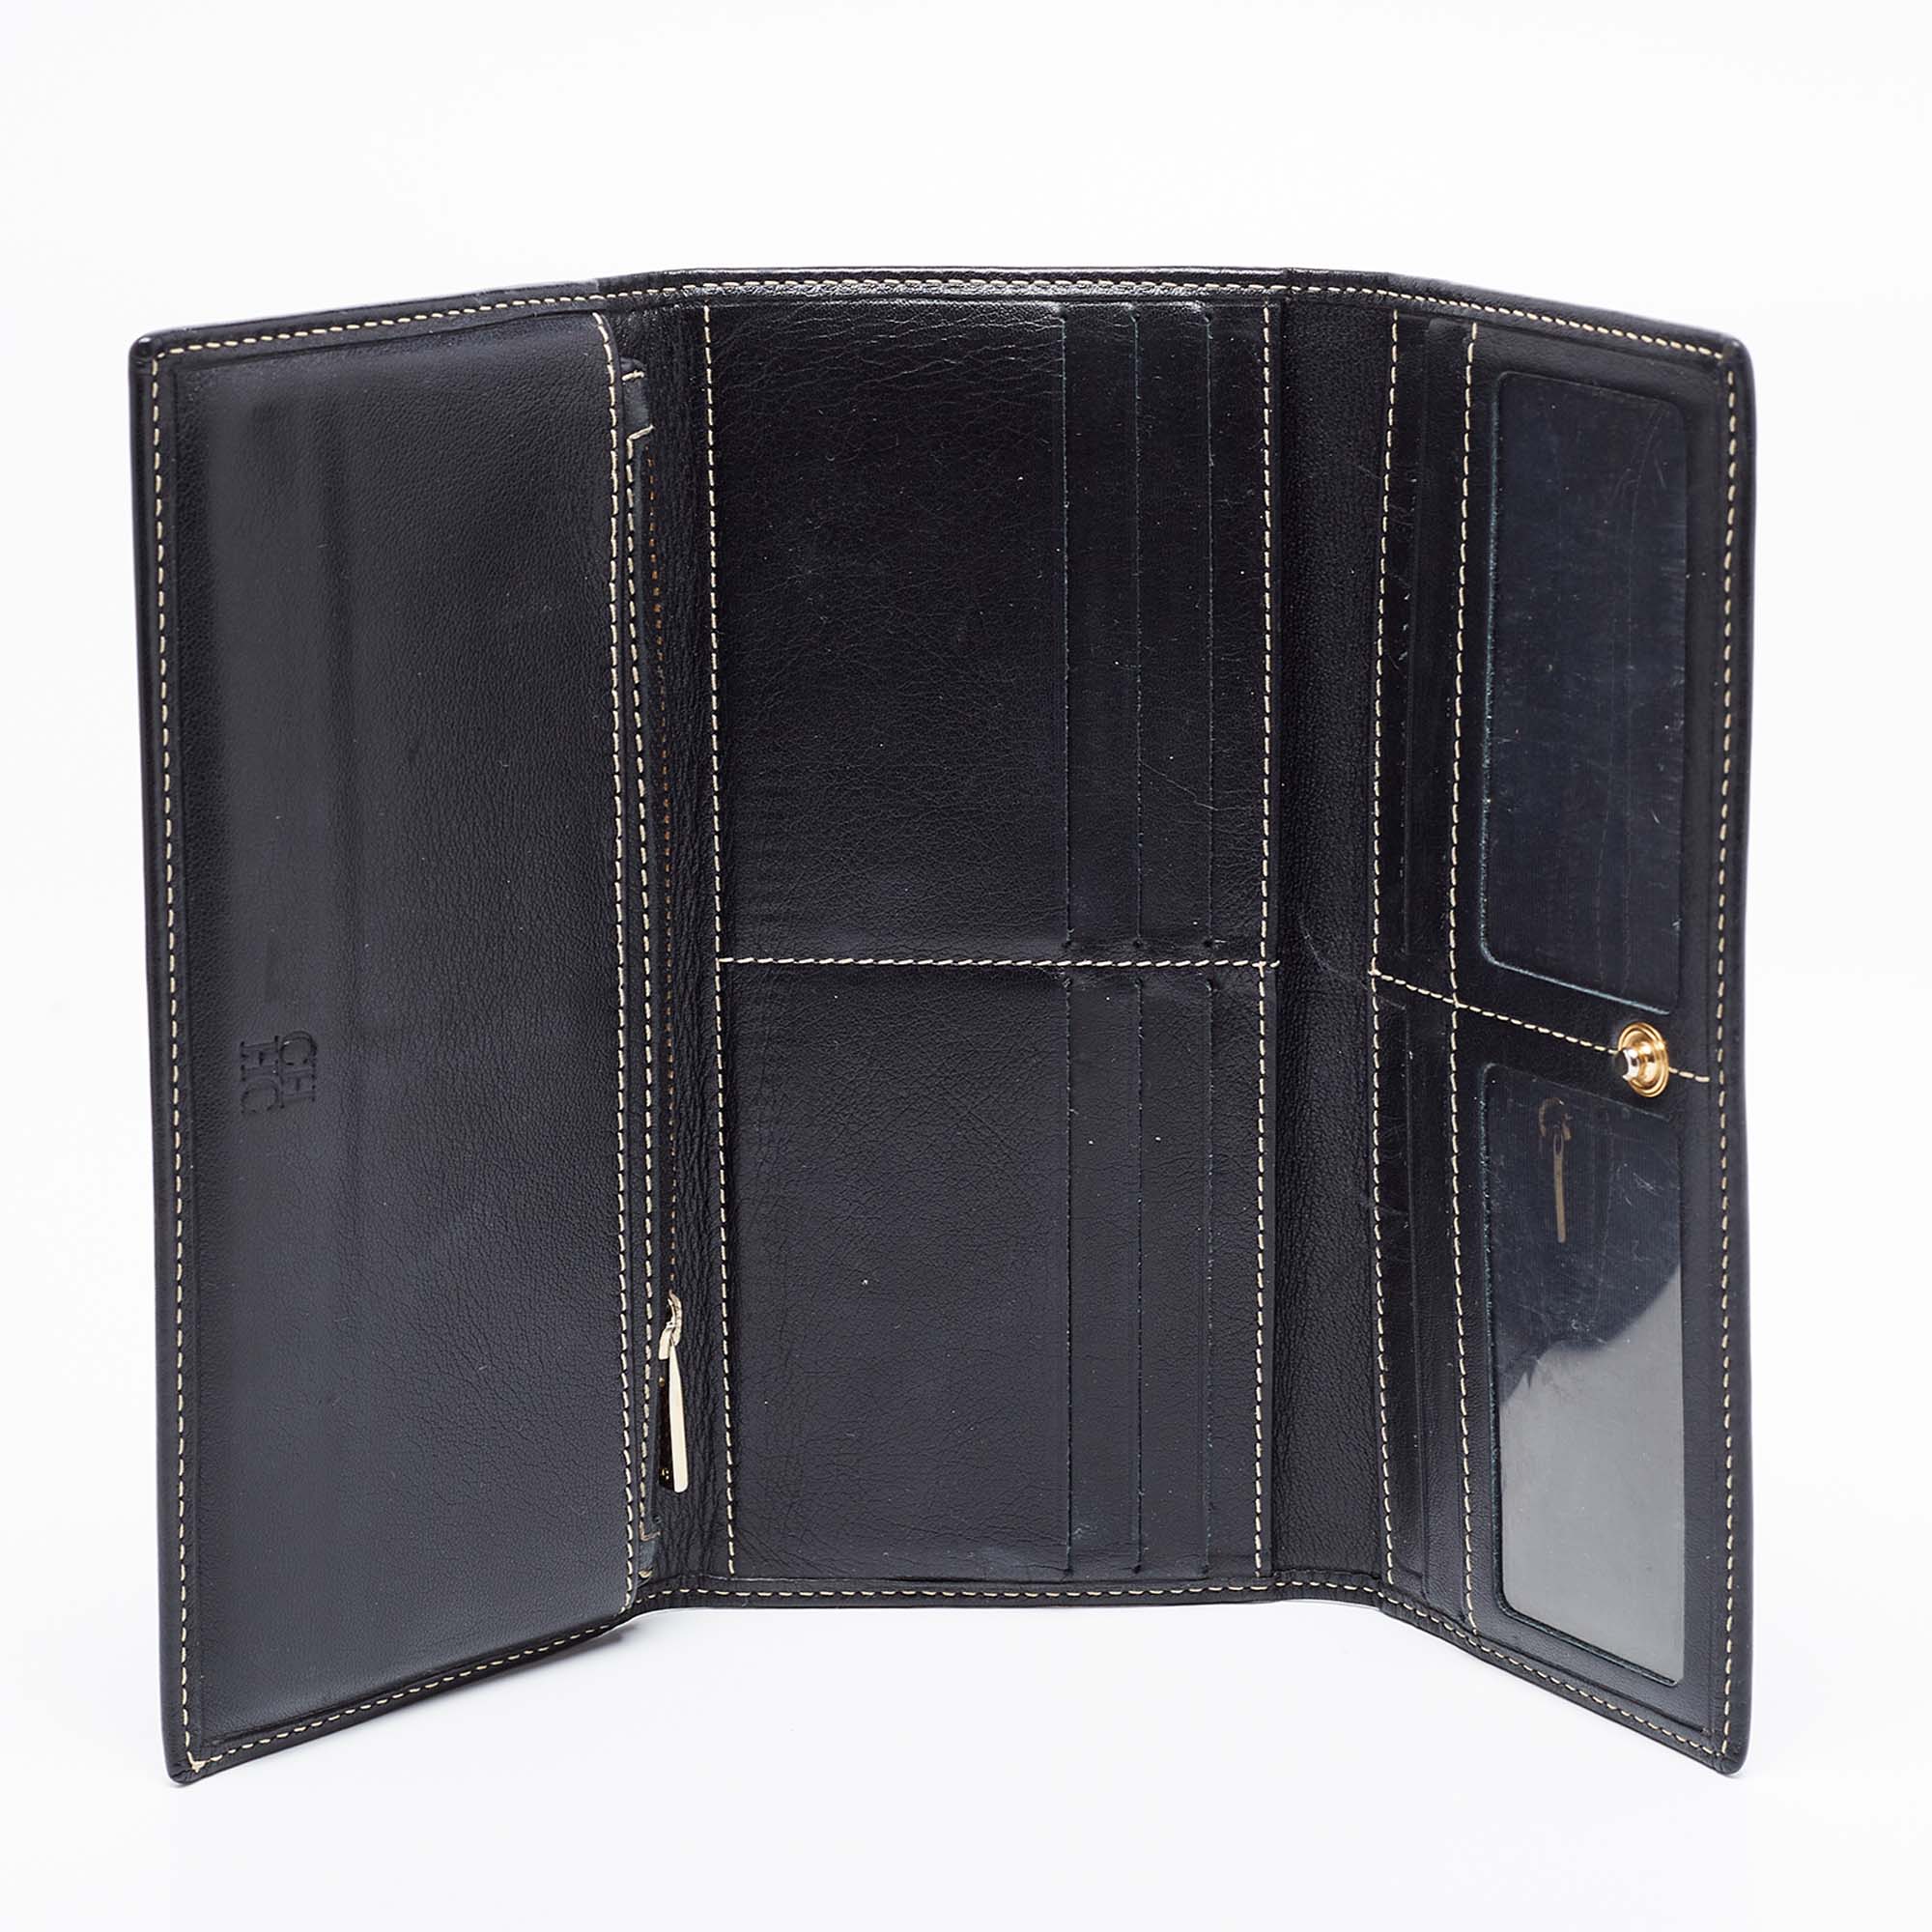 

CH Carolina Herrera Black Leather Continental Wallet